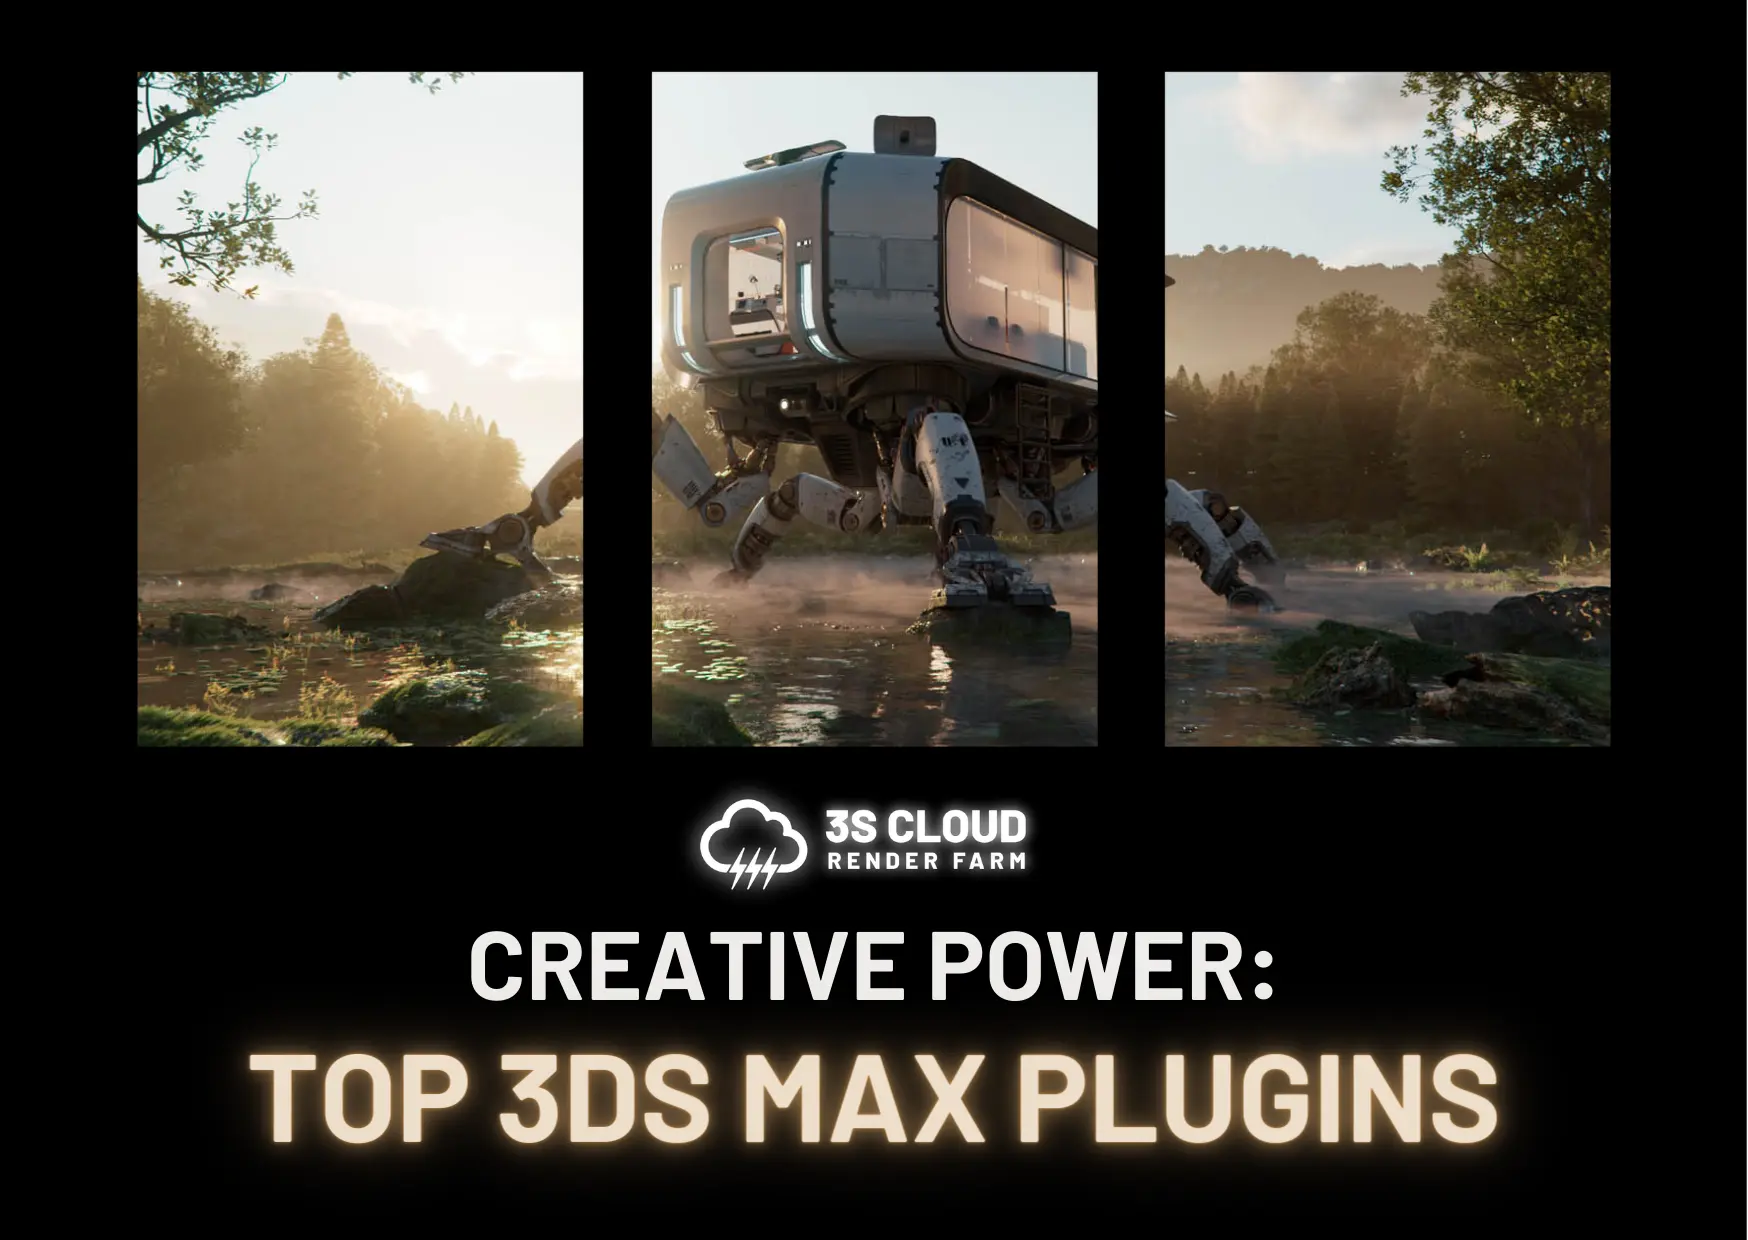 Top 3Ds Max Plugins